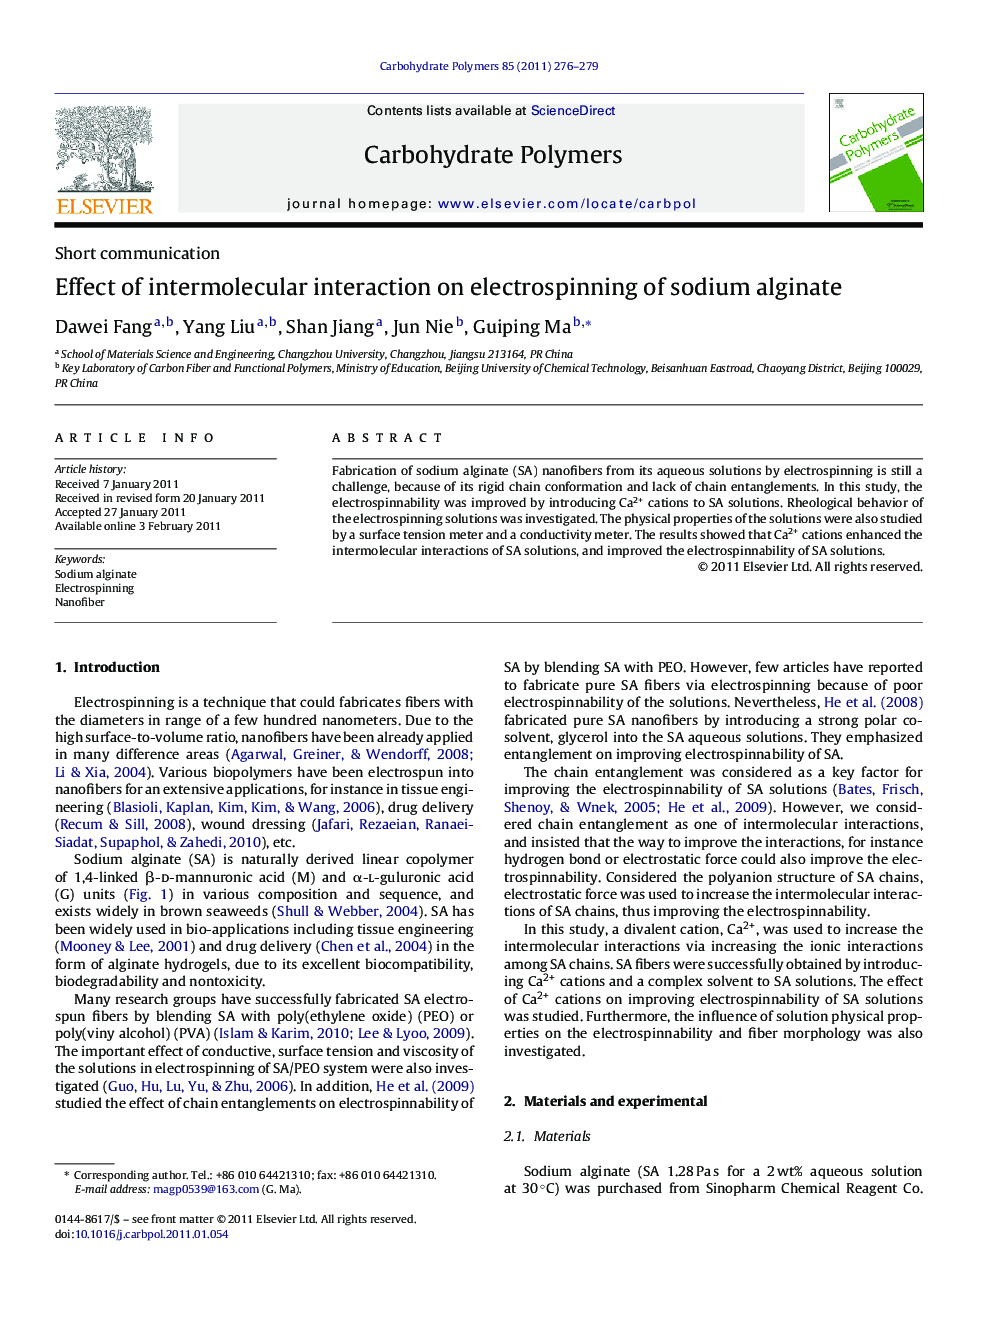 Effect of intermolecular interaction on electrospinning of sodium alginate